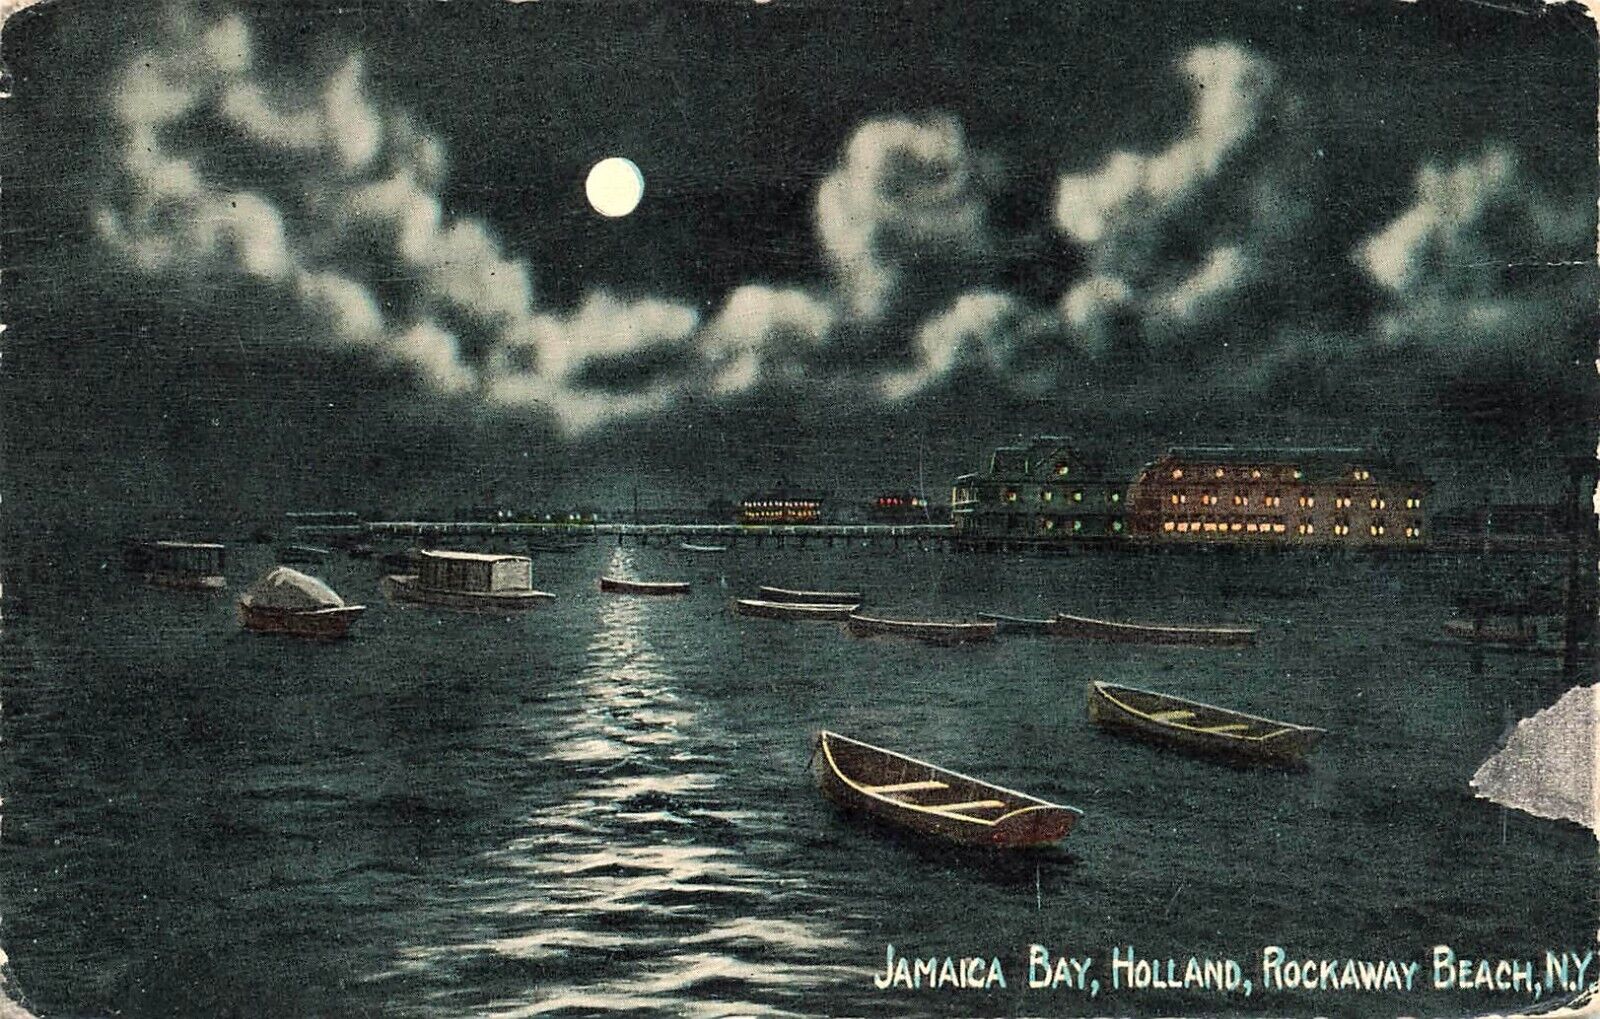 1914 NEW YORK POSTCARD: JAMAICA BAY, HOLLAND, ROCKAWAY BEACH, NY